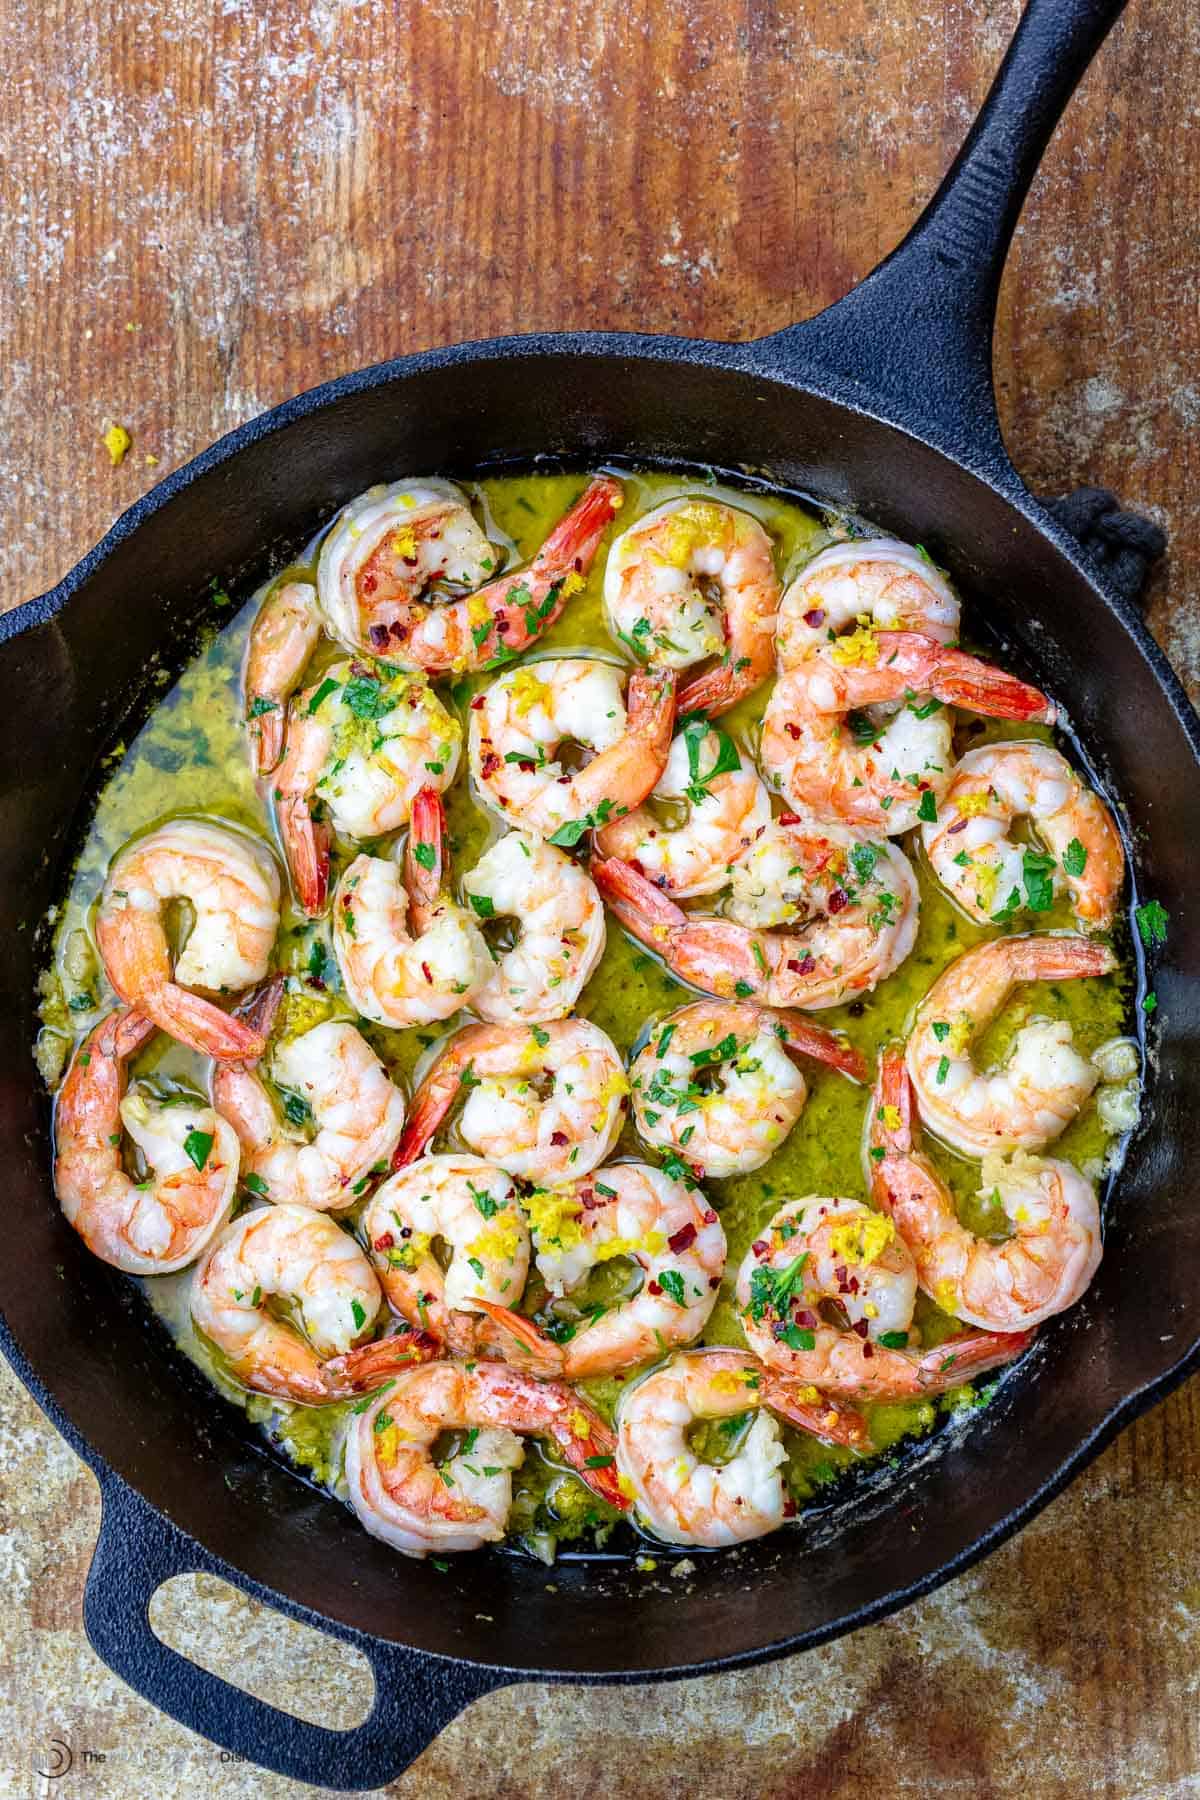 https://www.themediterraneandish.com/wp-content/uploads/2021/08/shrimp-scampi-recipe-7.jpg